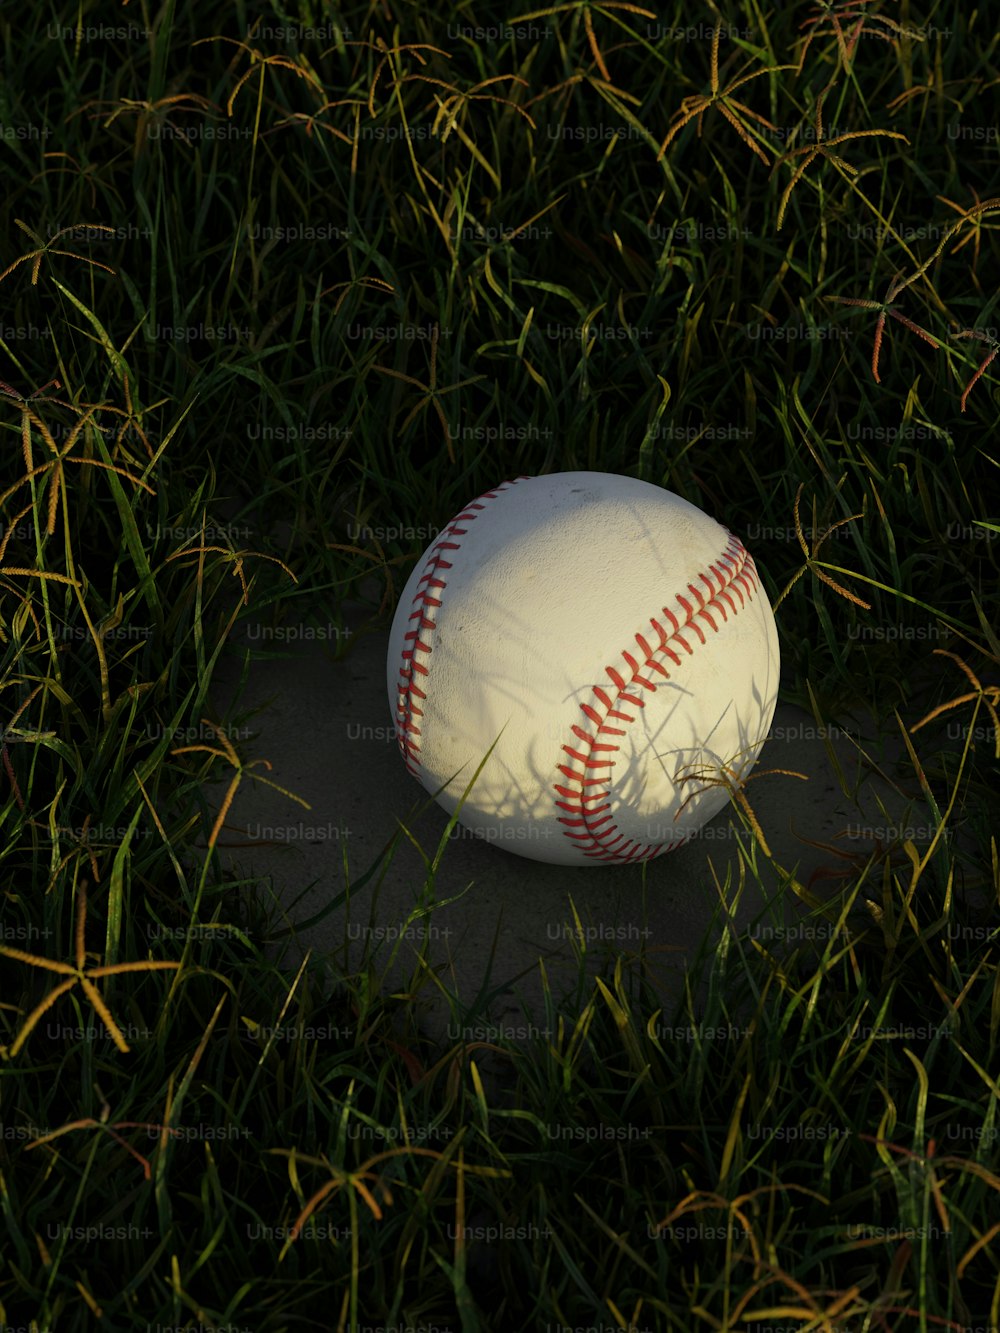 una palla da baseball sdraiata a terra nell'erba